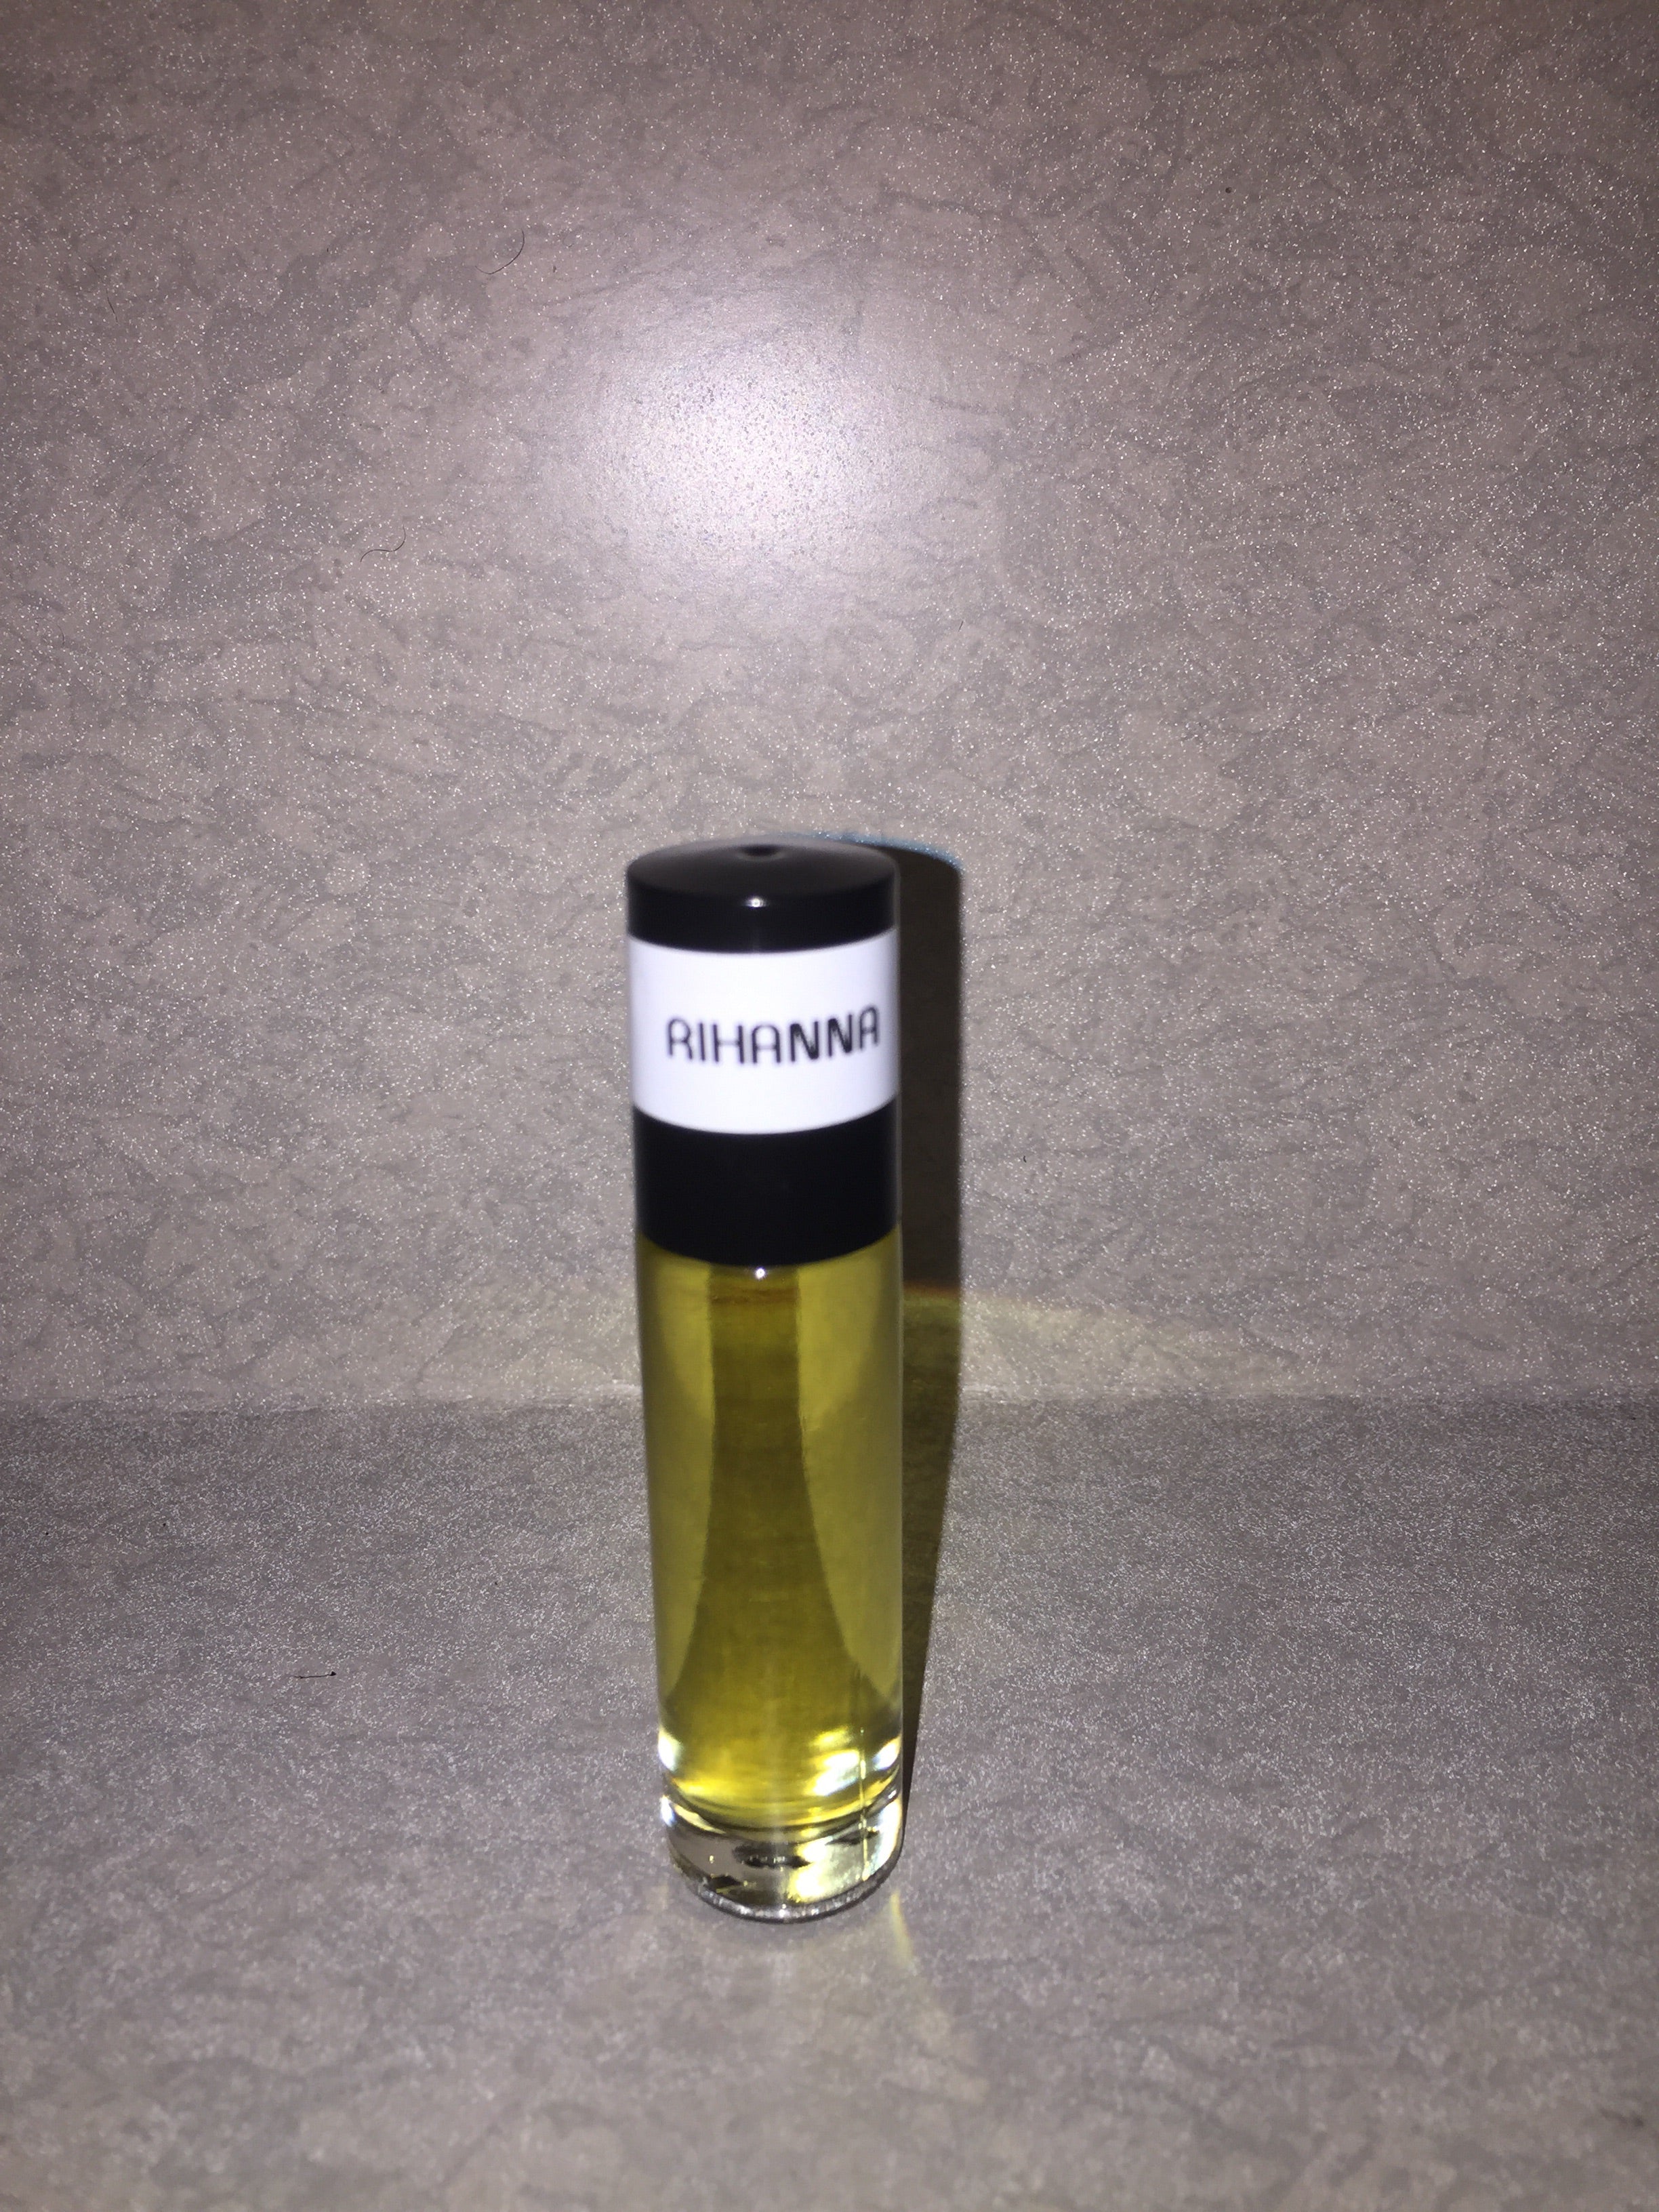 Euphoria - Type for Women Perfume Body Oil Fragrance [Roll-On